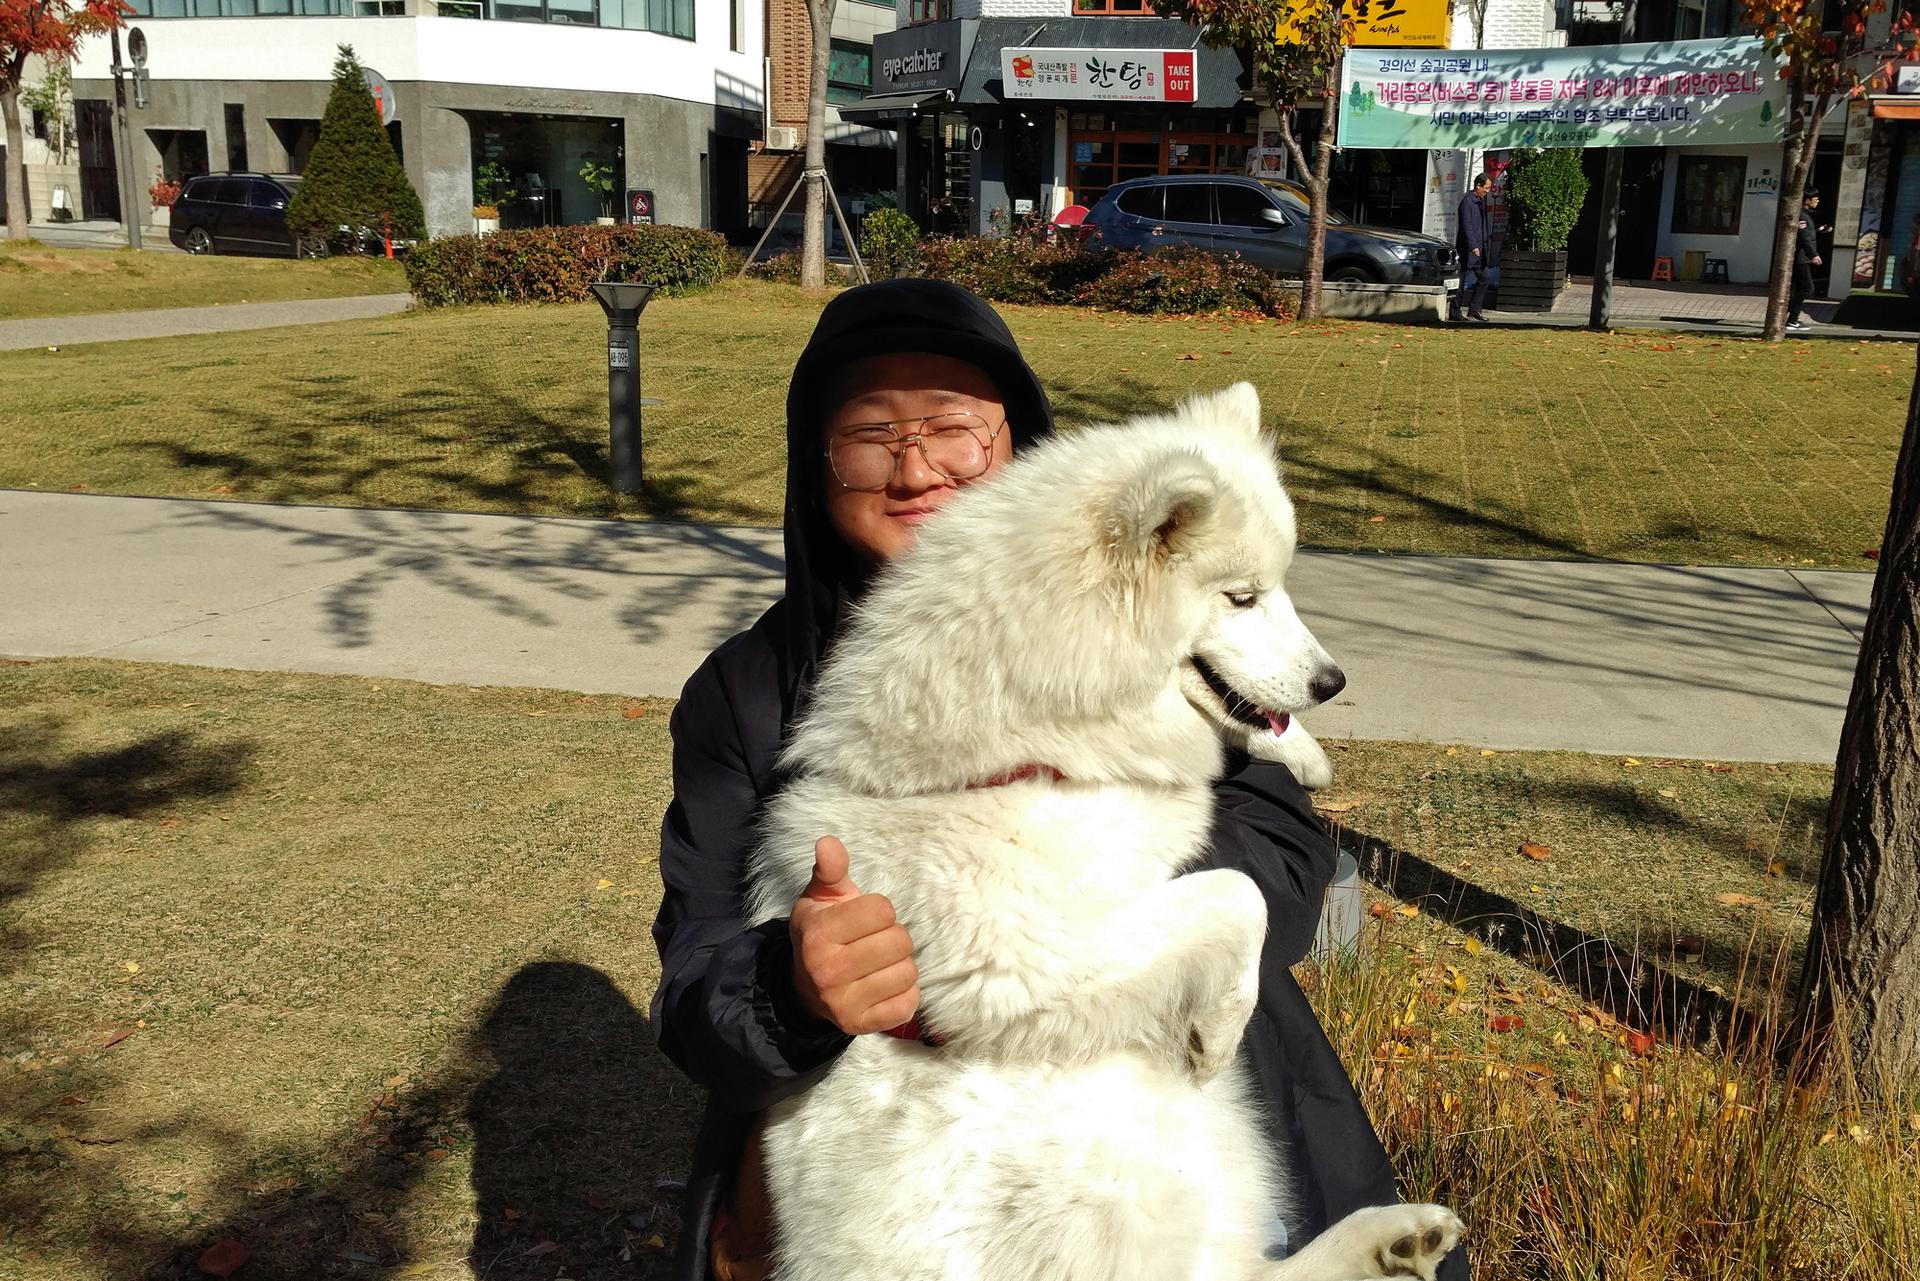 Kim Jong-yoon hugs a white dog.